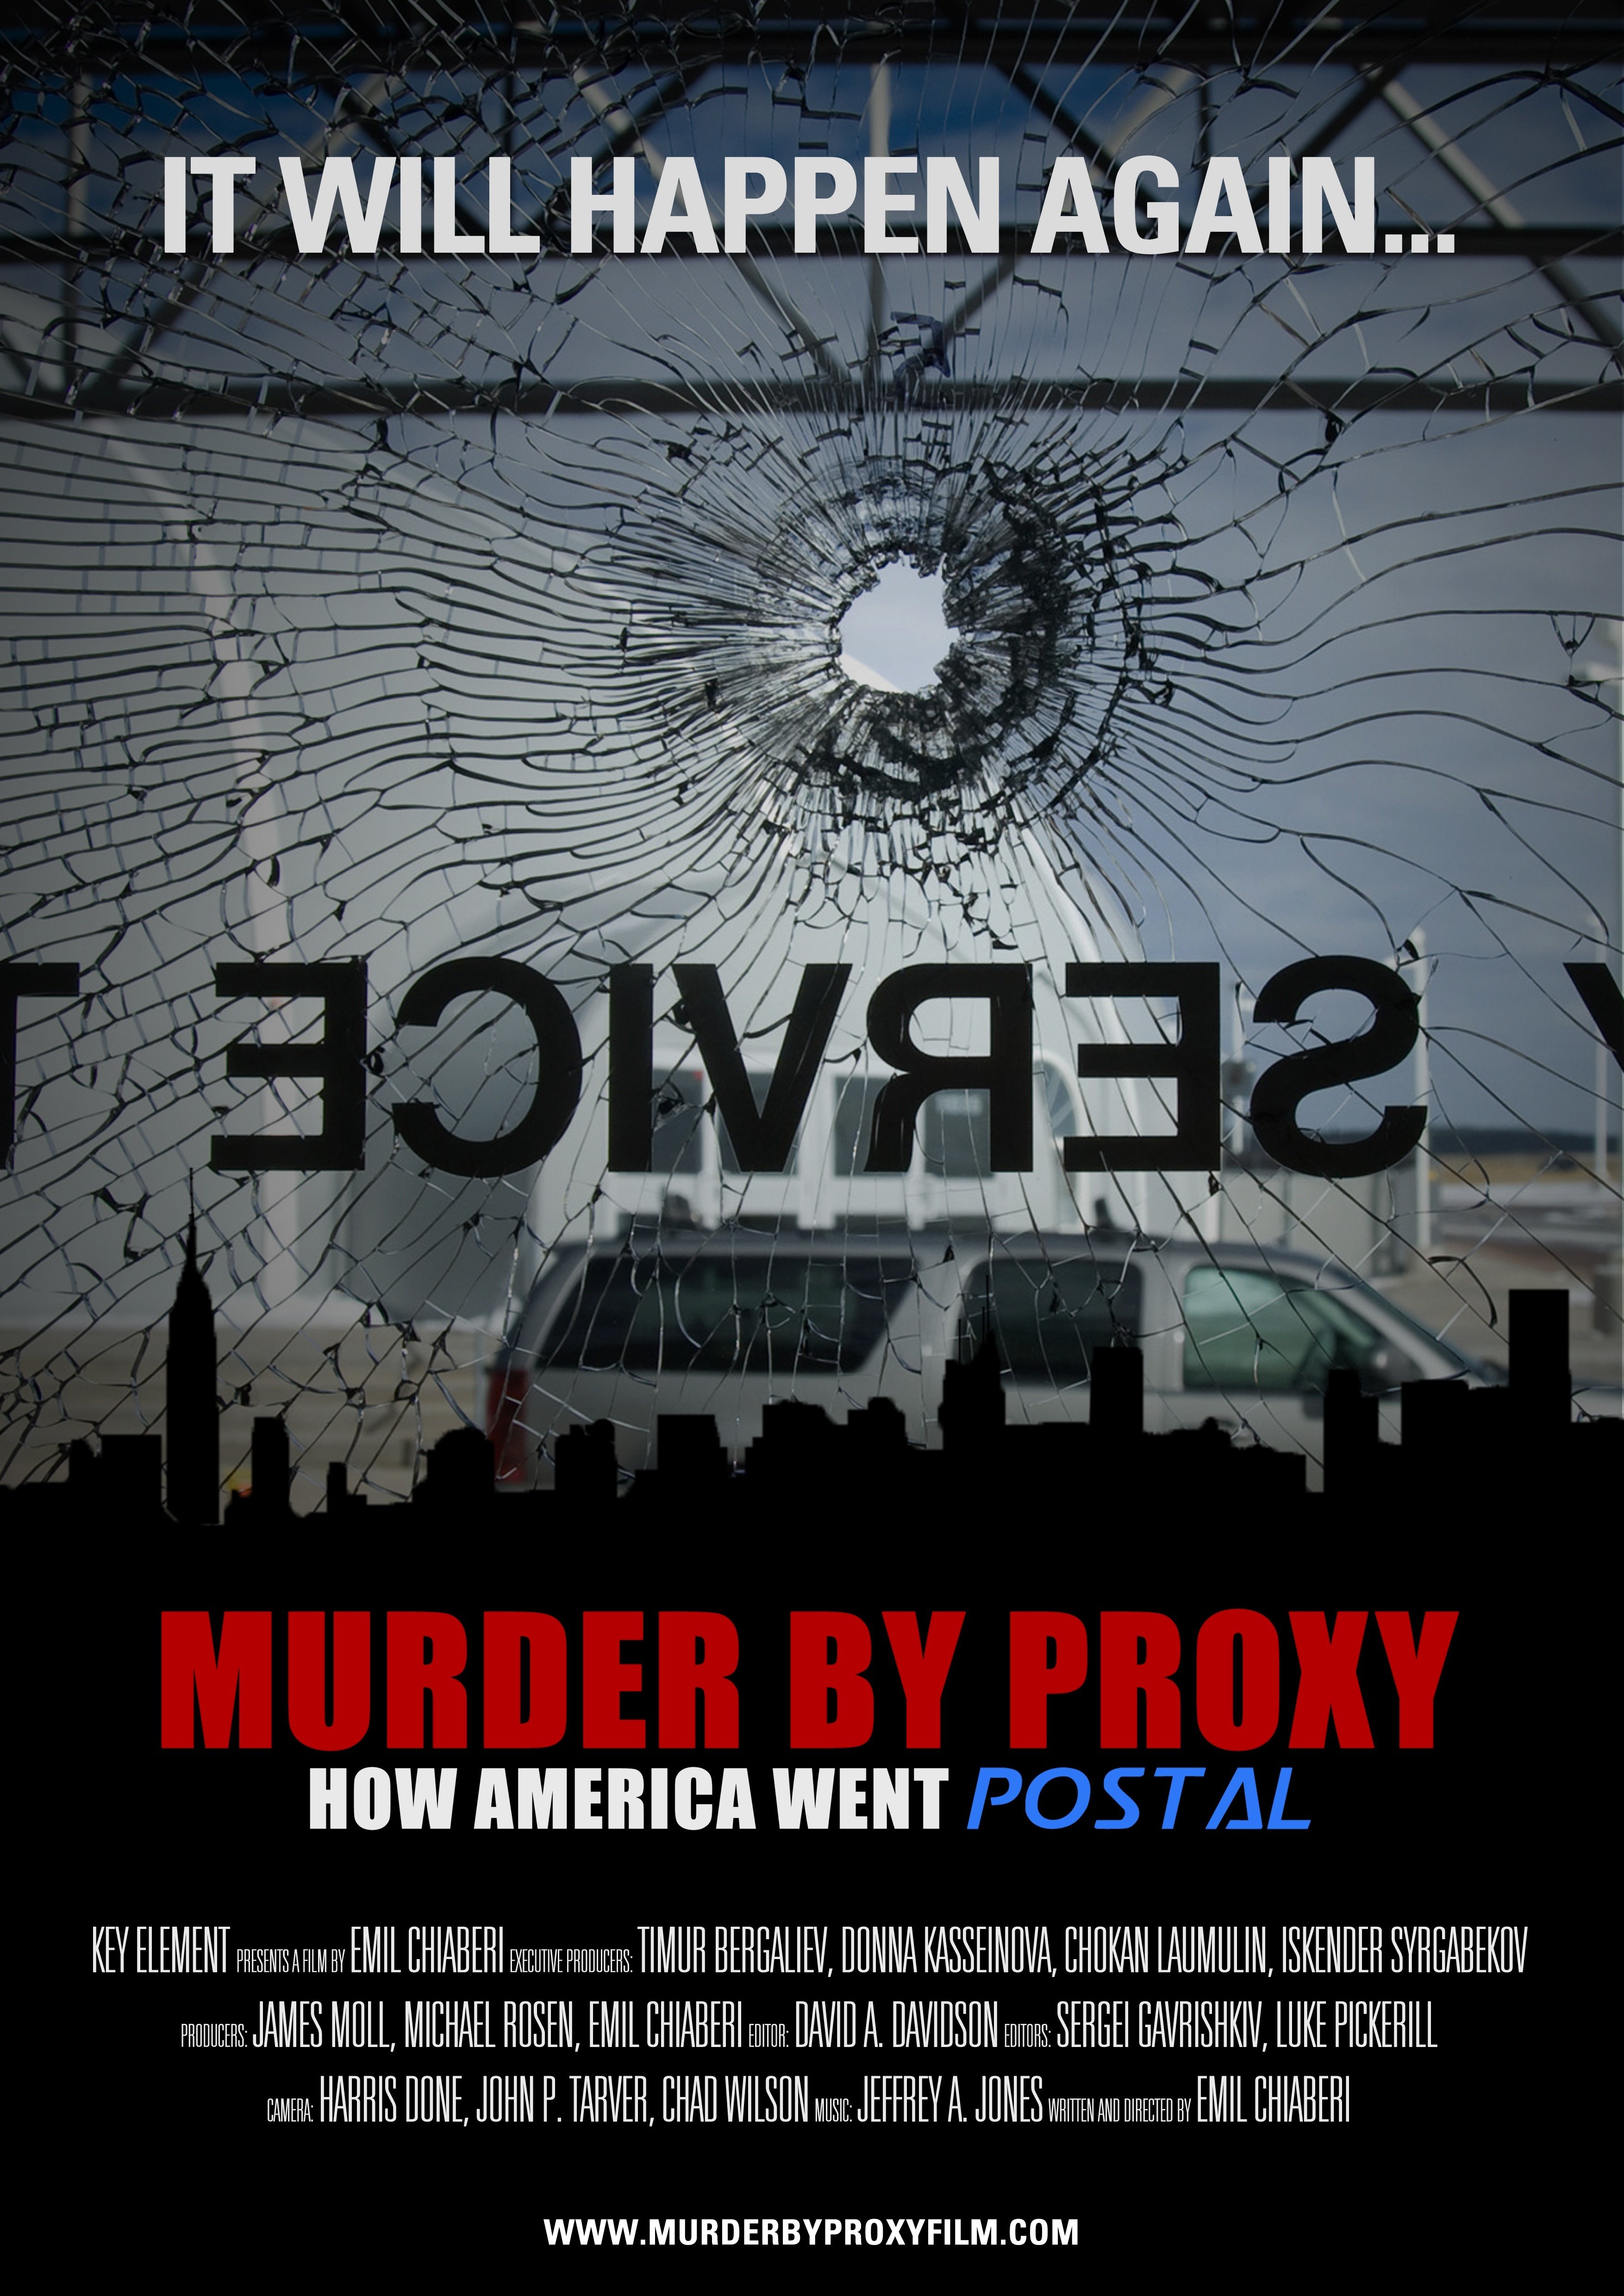 Murder by Proxy: How America Went Postal (2010) Screenshot 1 